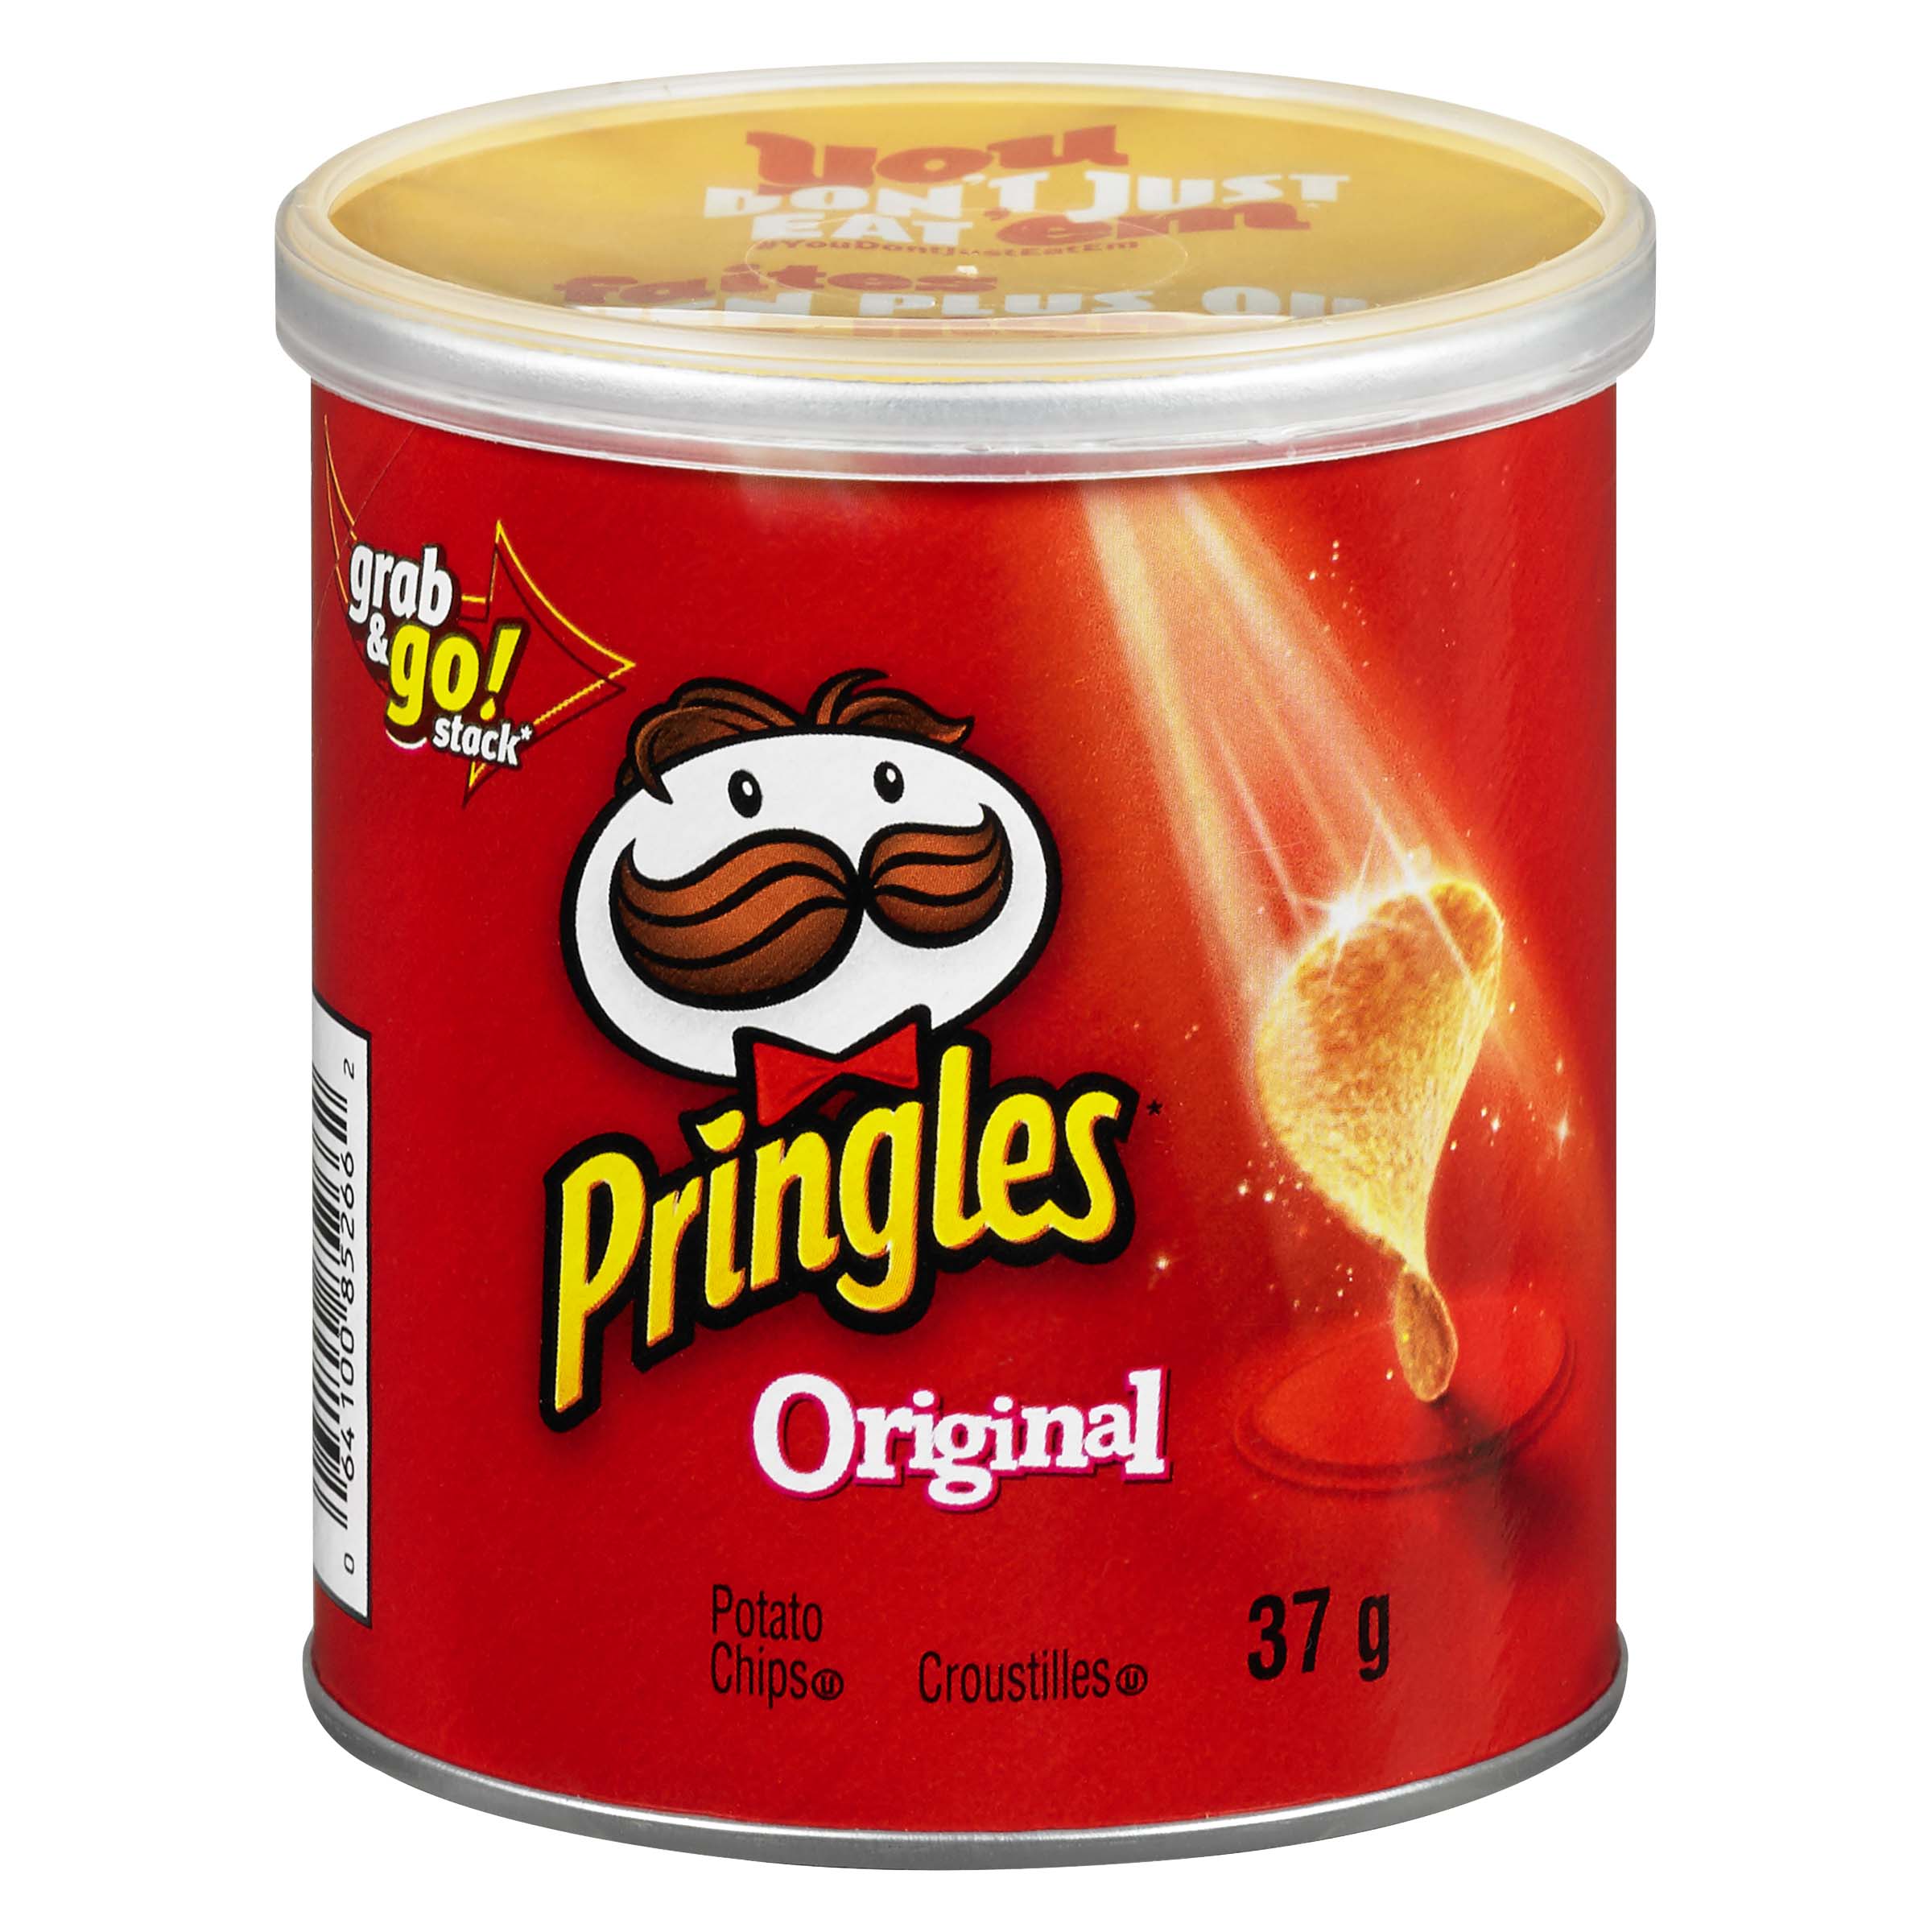 PRINGLES ORIGINAL | Powell's Supermarkets